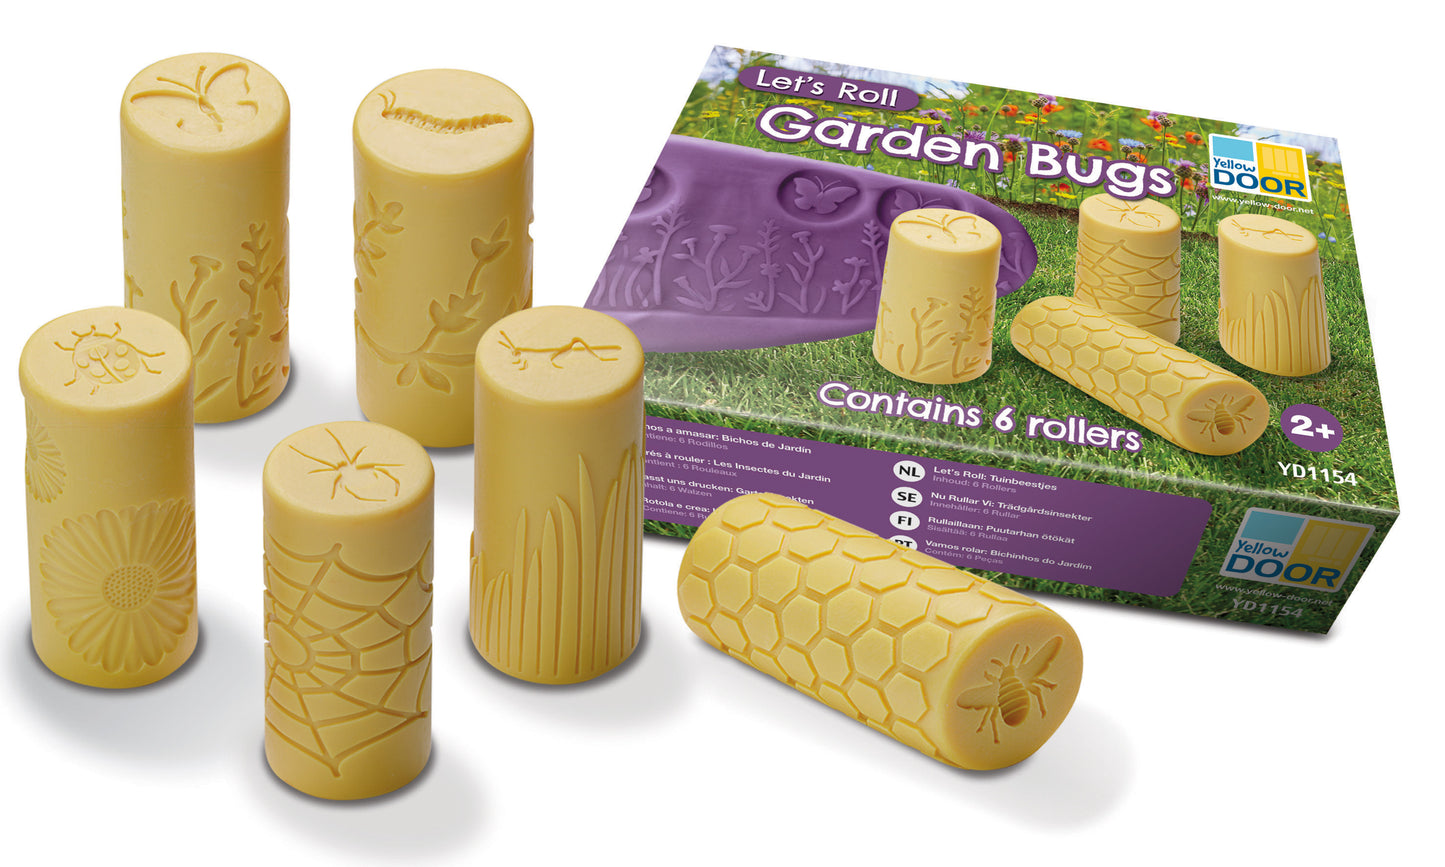 Garden Bugs Rollers & Stampers (set of 6)